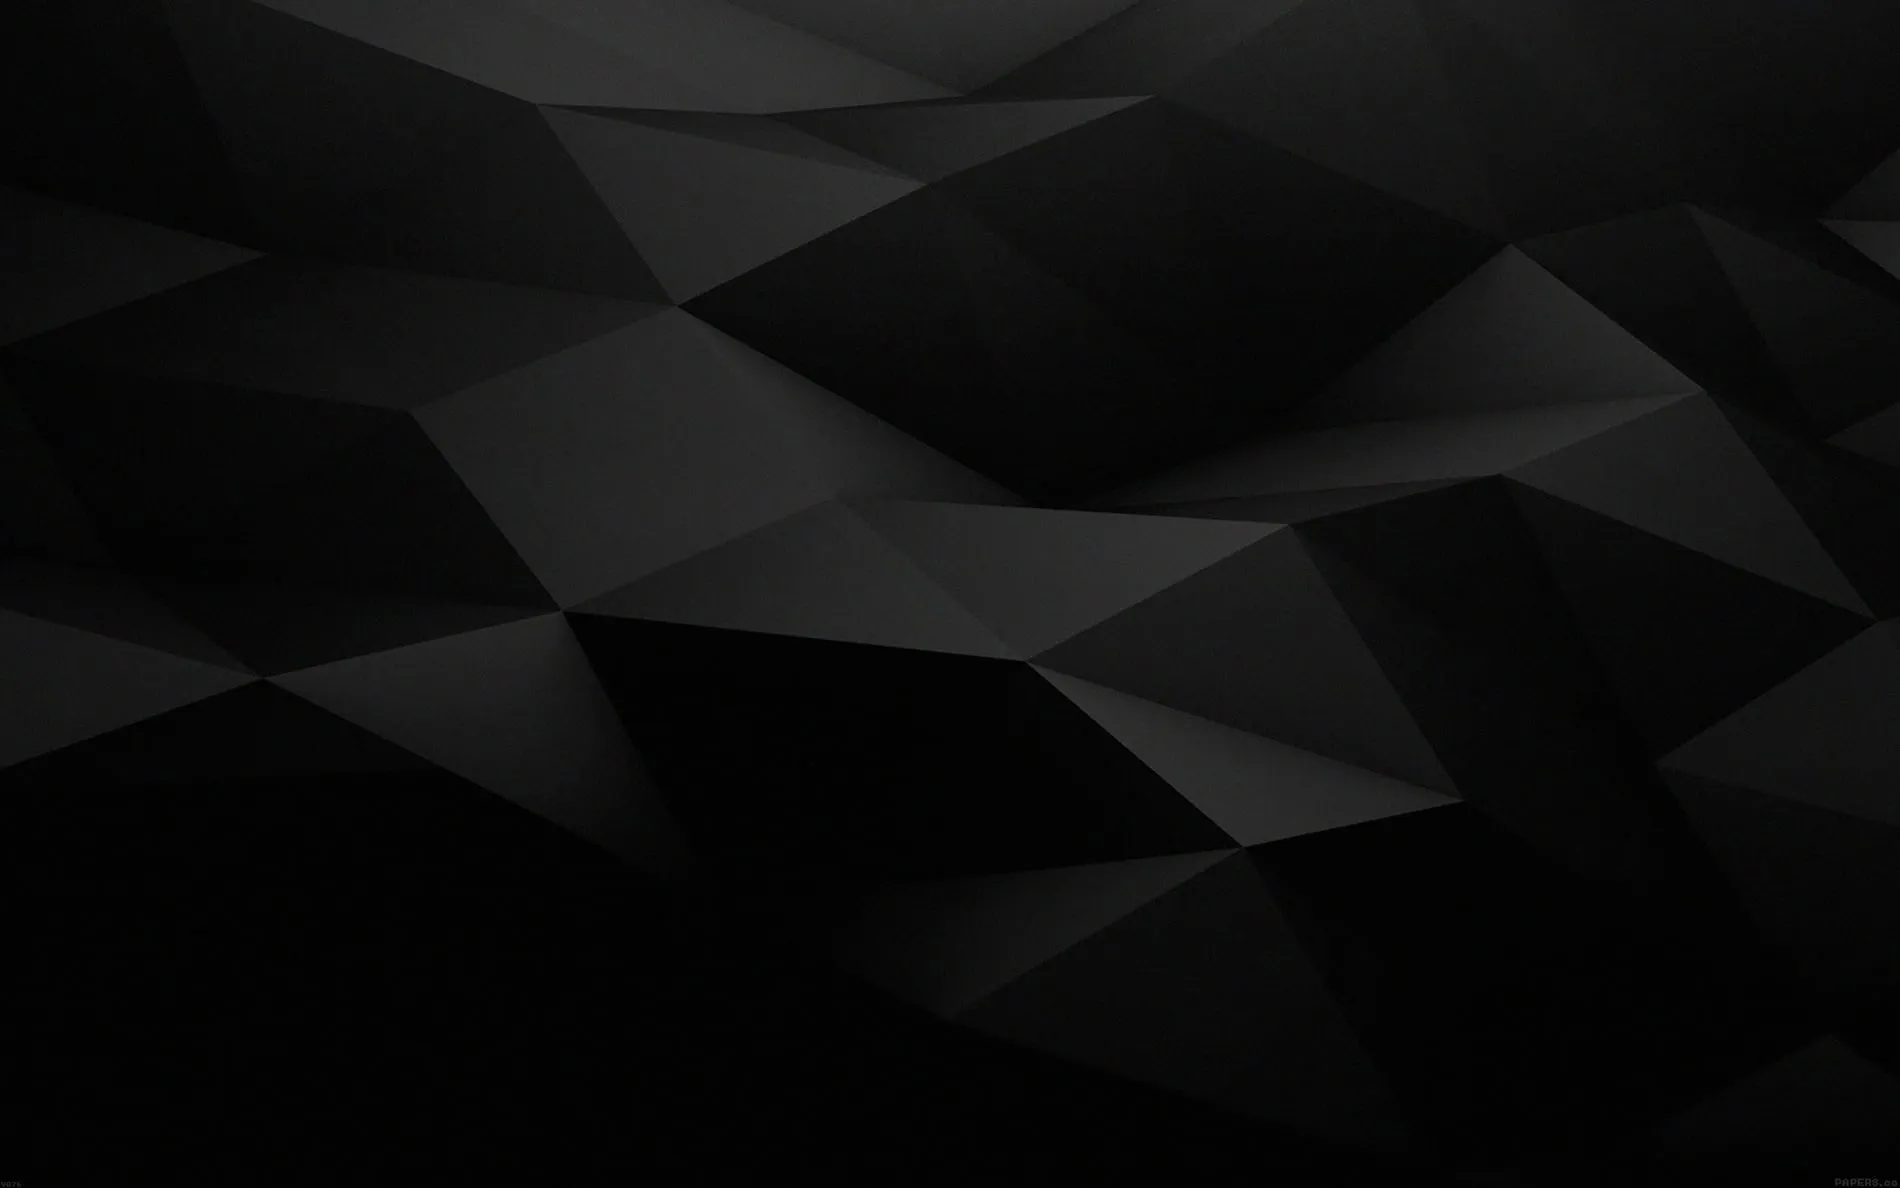 A black geometric pattern